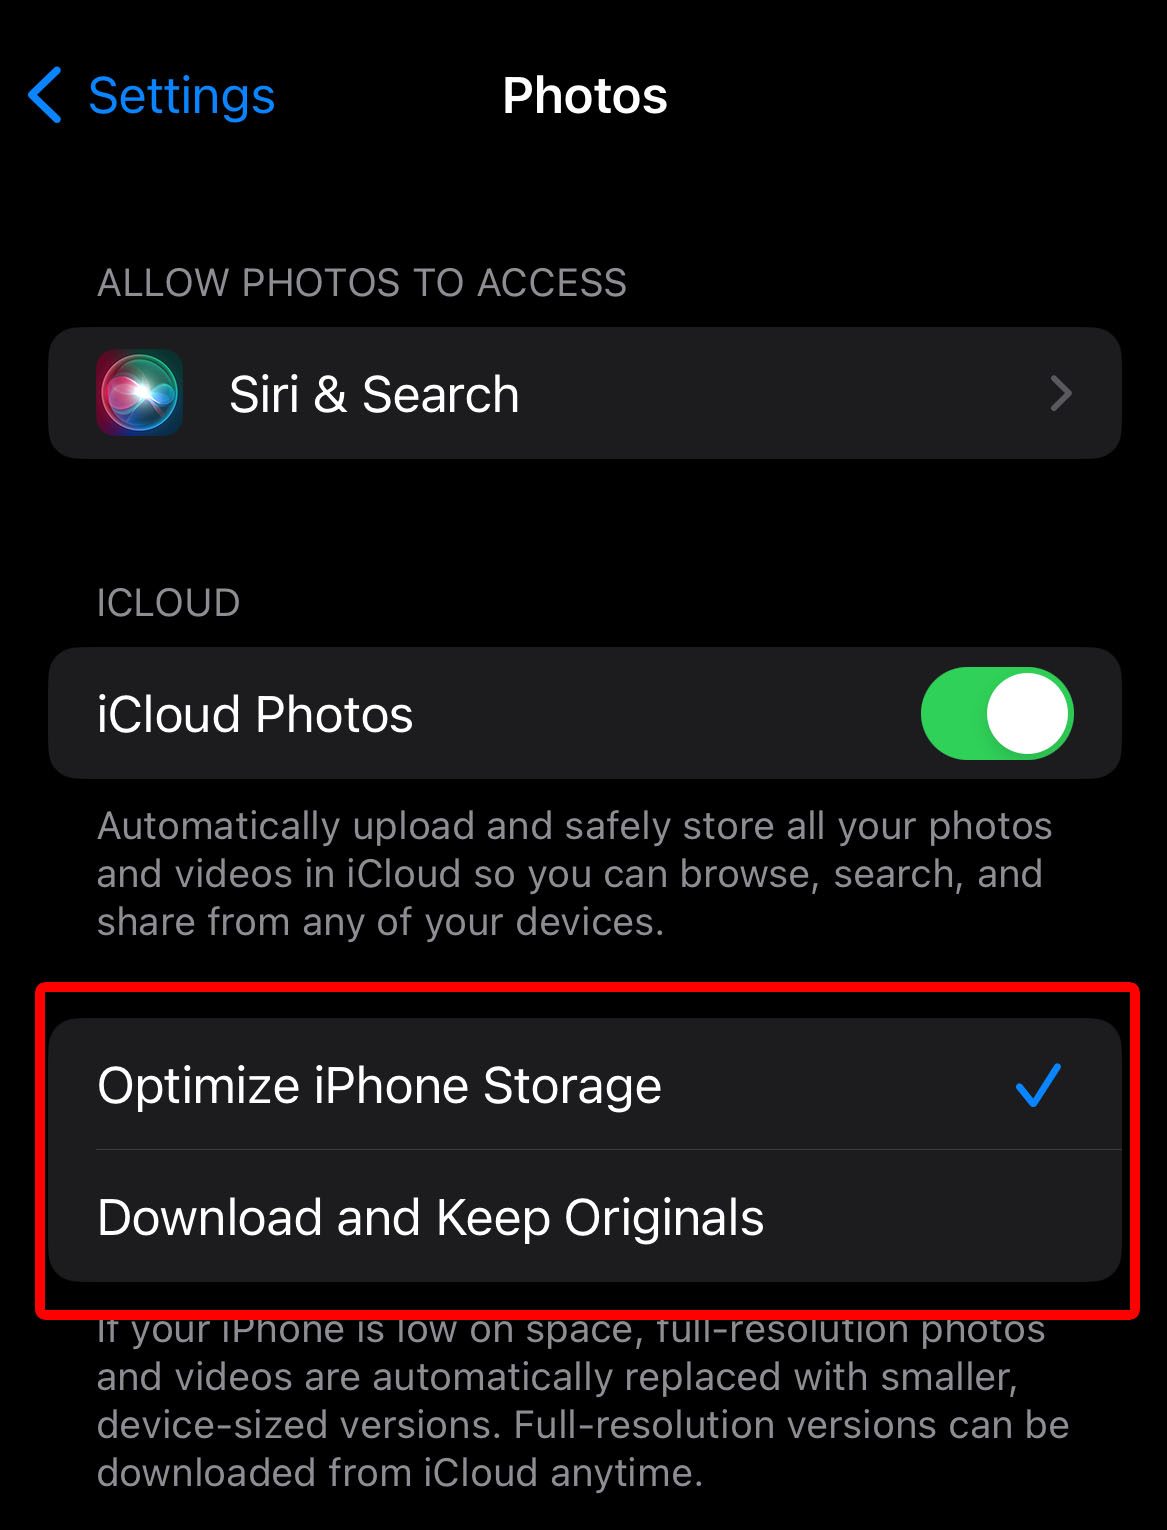 select optimize iphone storage